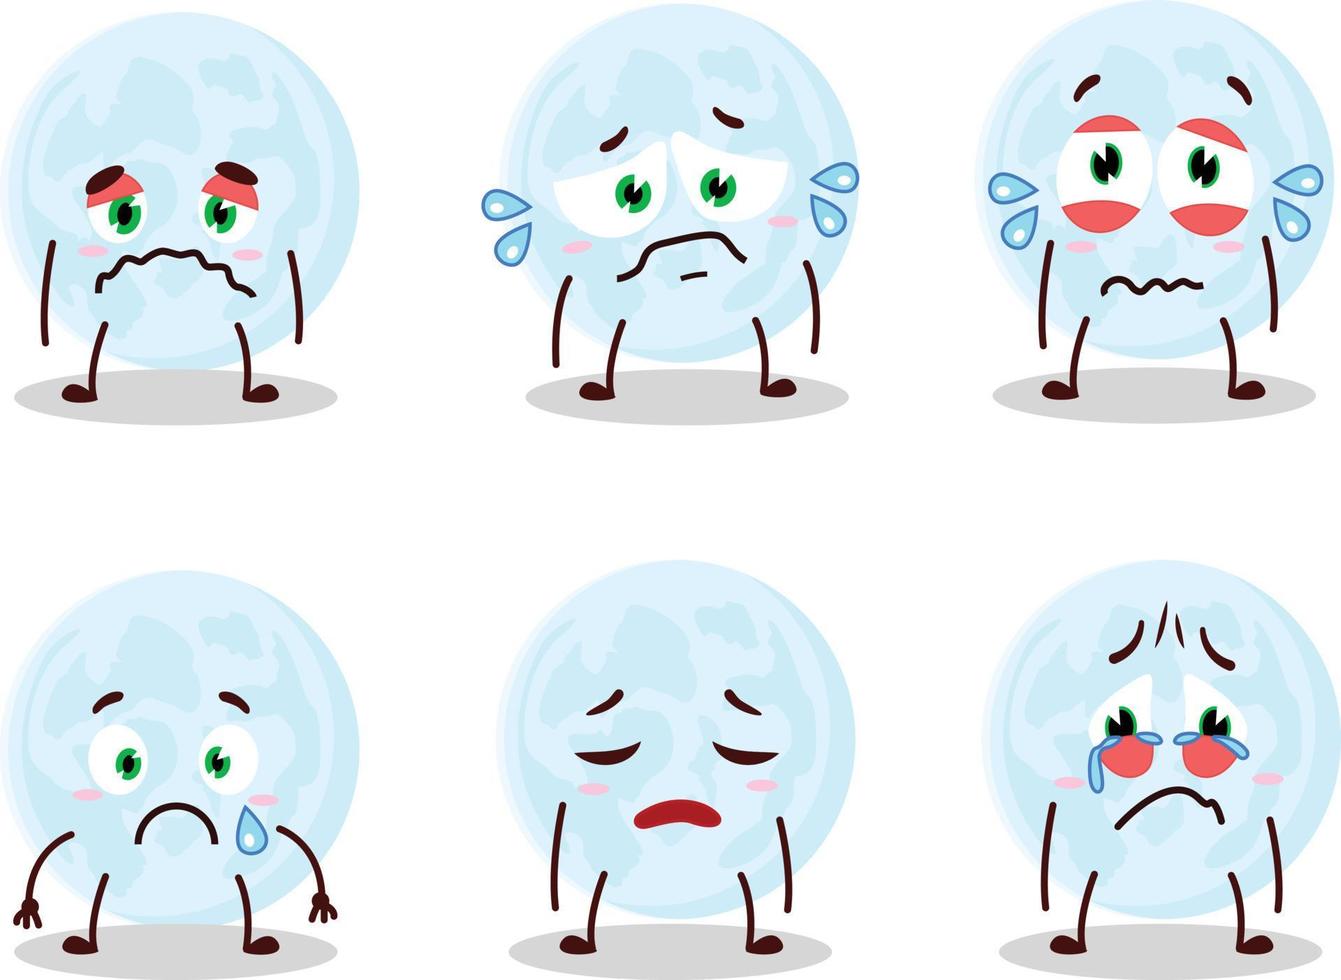 azul Luna dibujos animados personaje con triste expresión vector